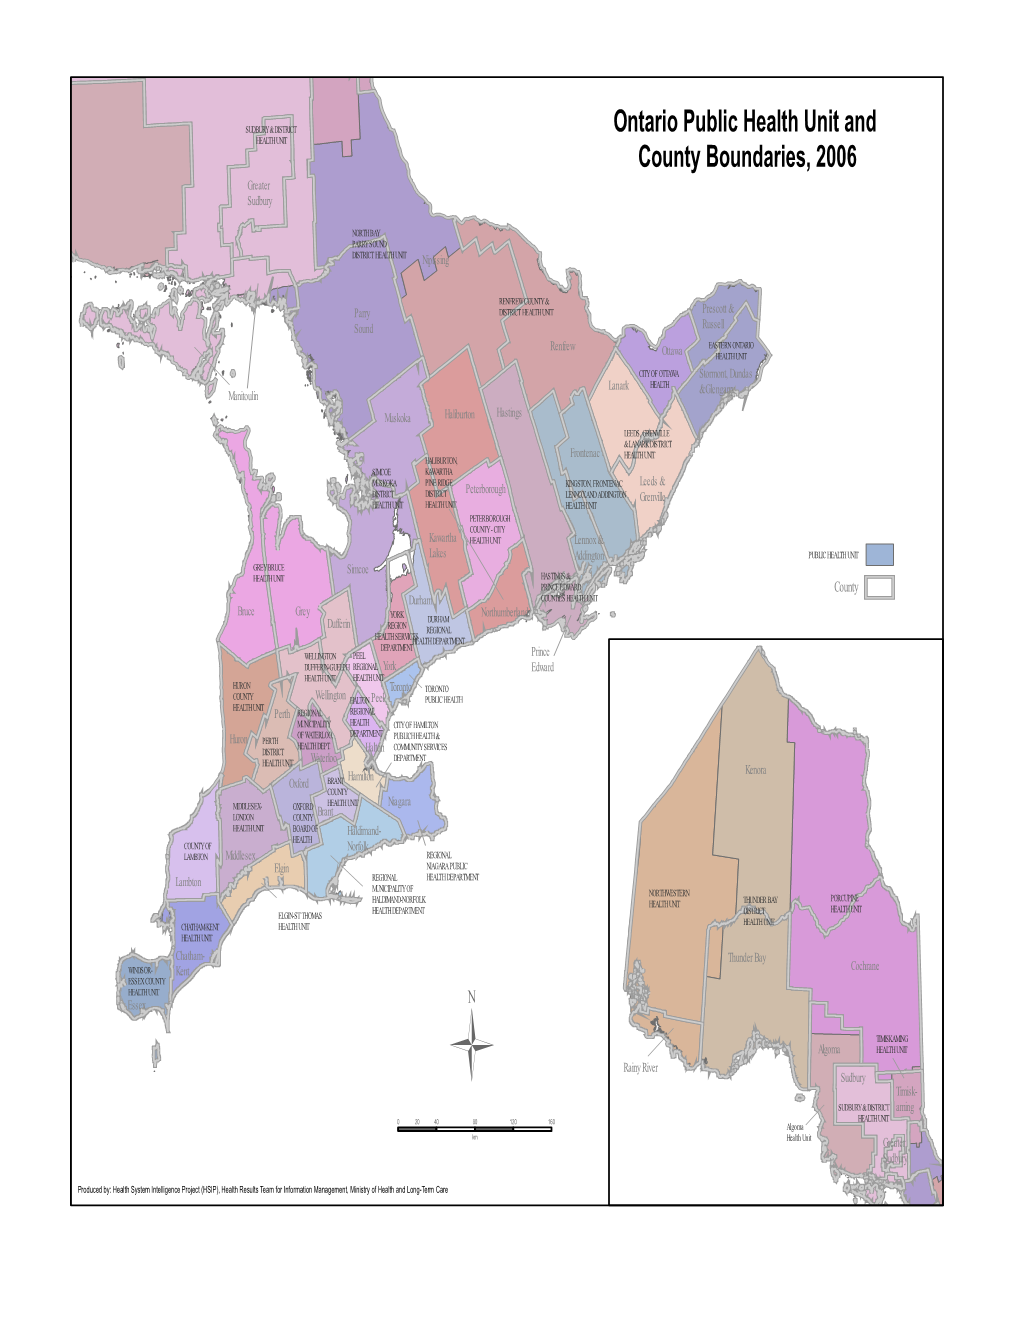 Ontario Public Health Unit and County Boundaries, 2006